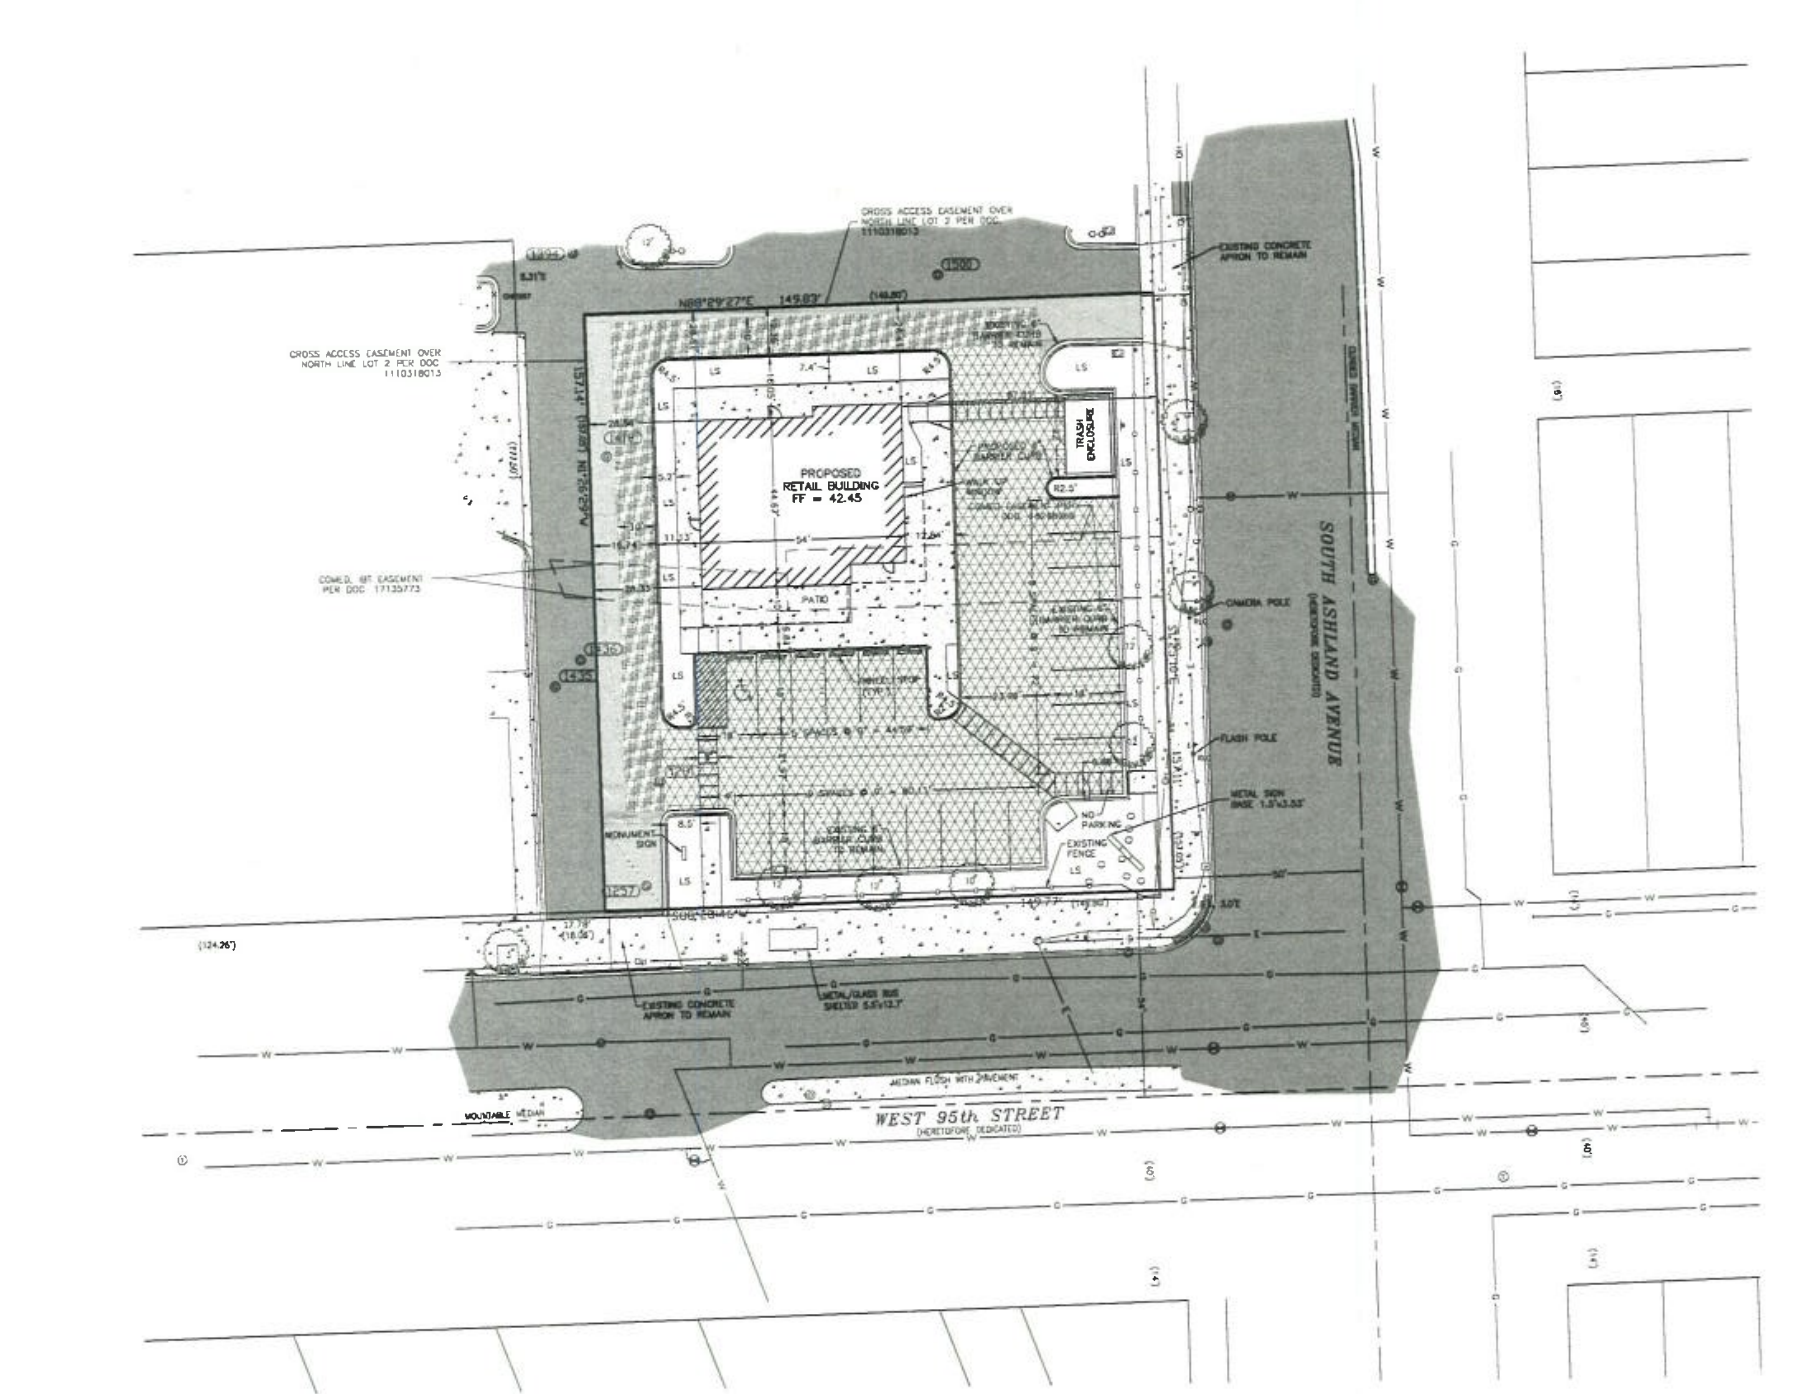 9438 S Ashland Avenue site plan